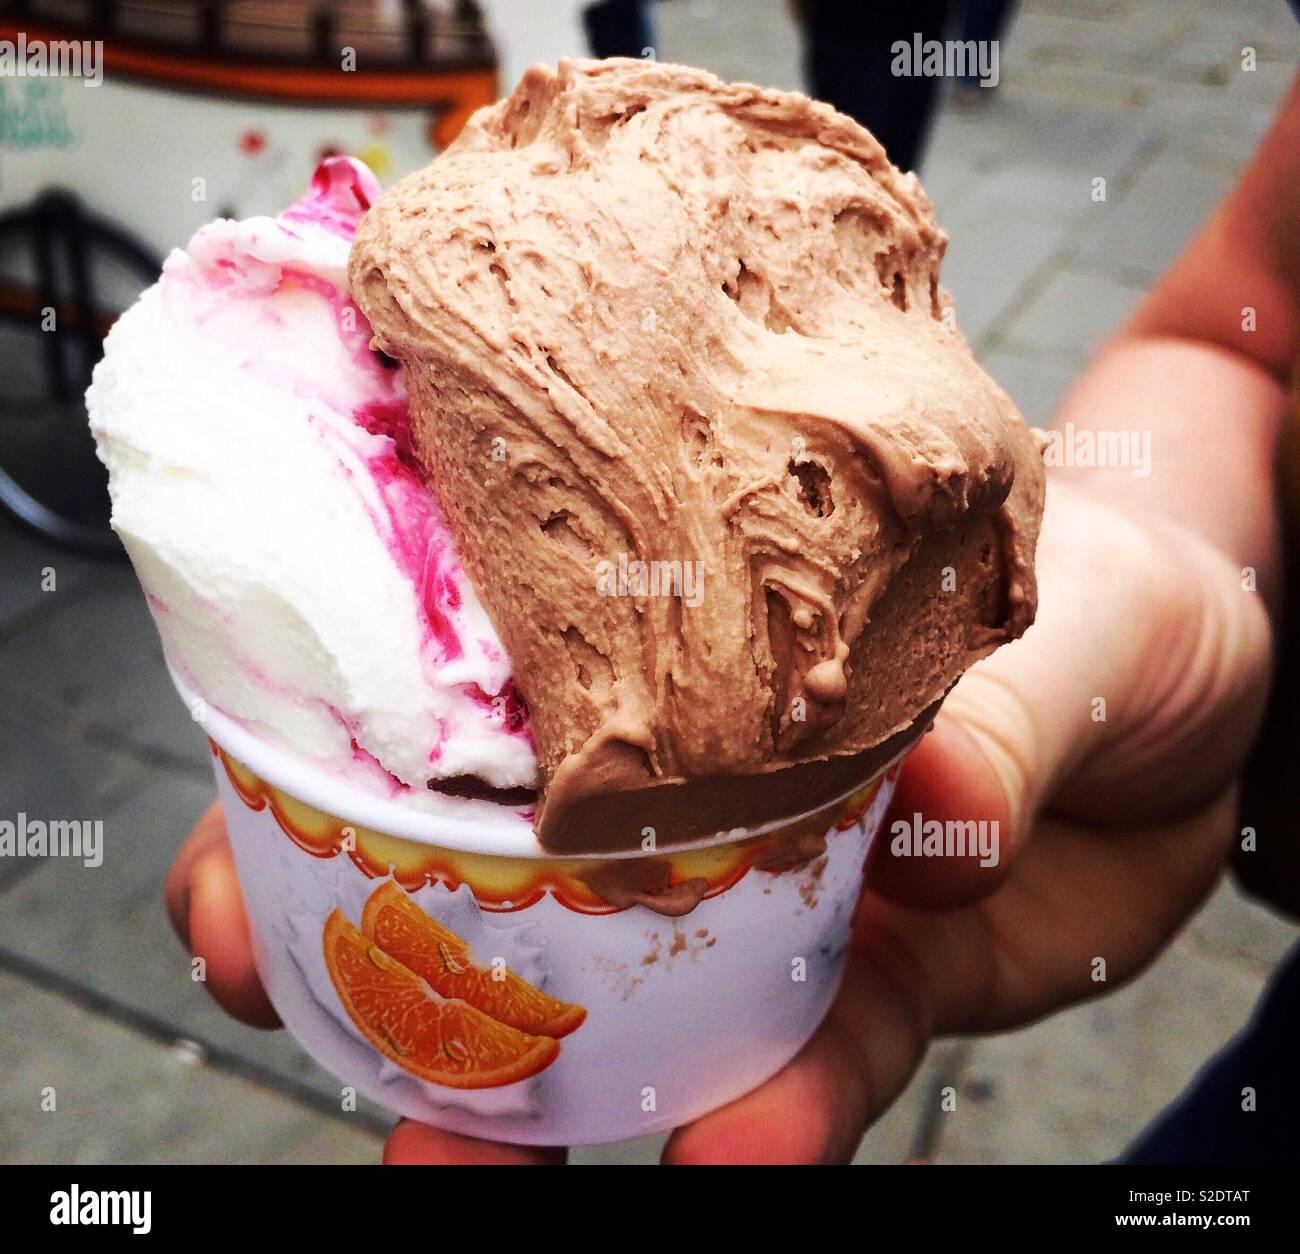 Chocolate and cherry gelato, Italy Stock Photo